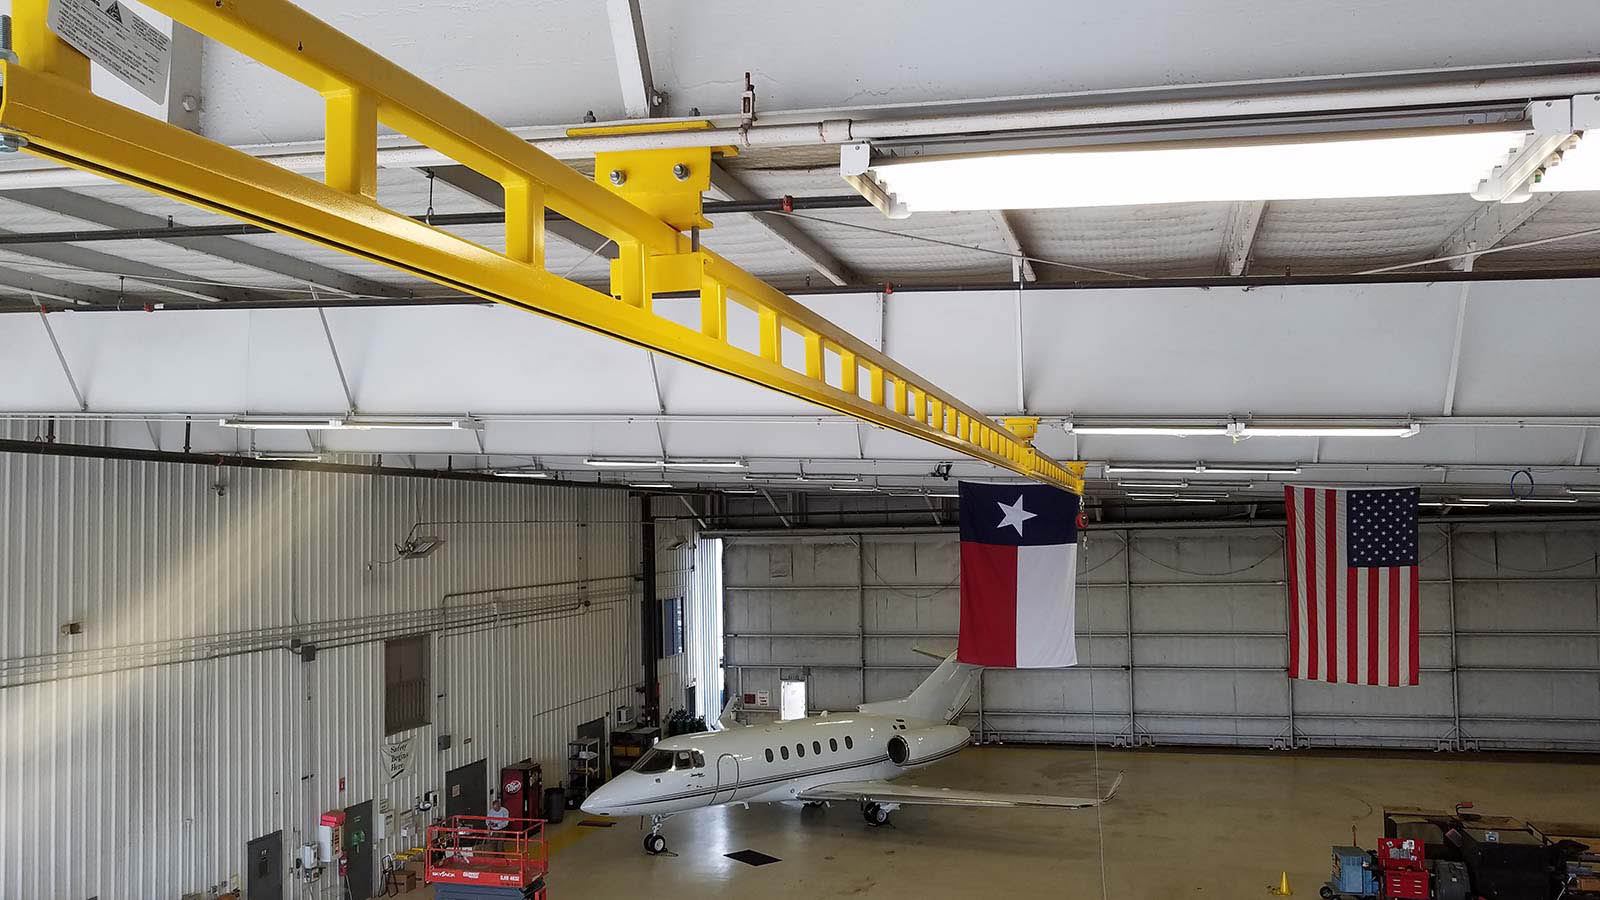 Aircraft Hanger Fall Protection